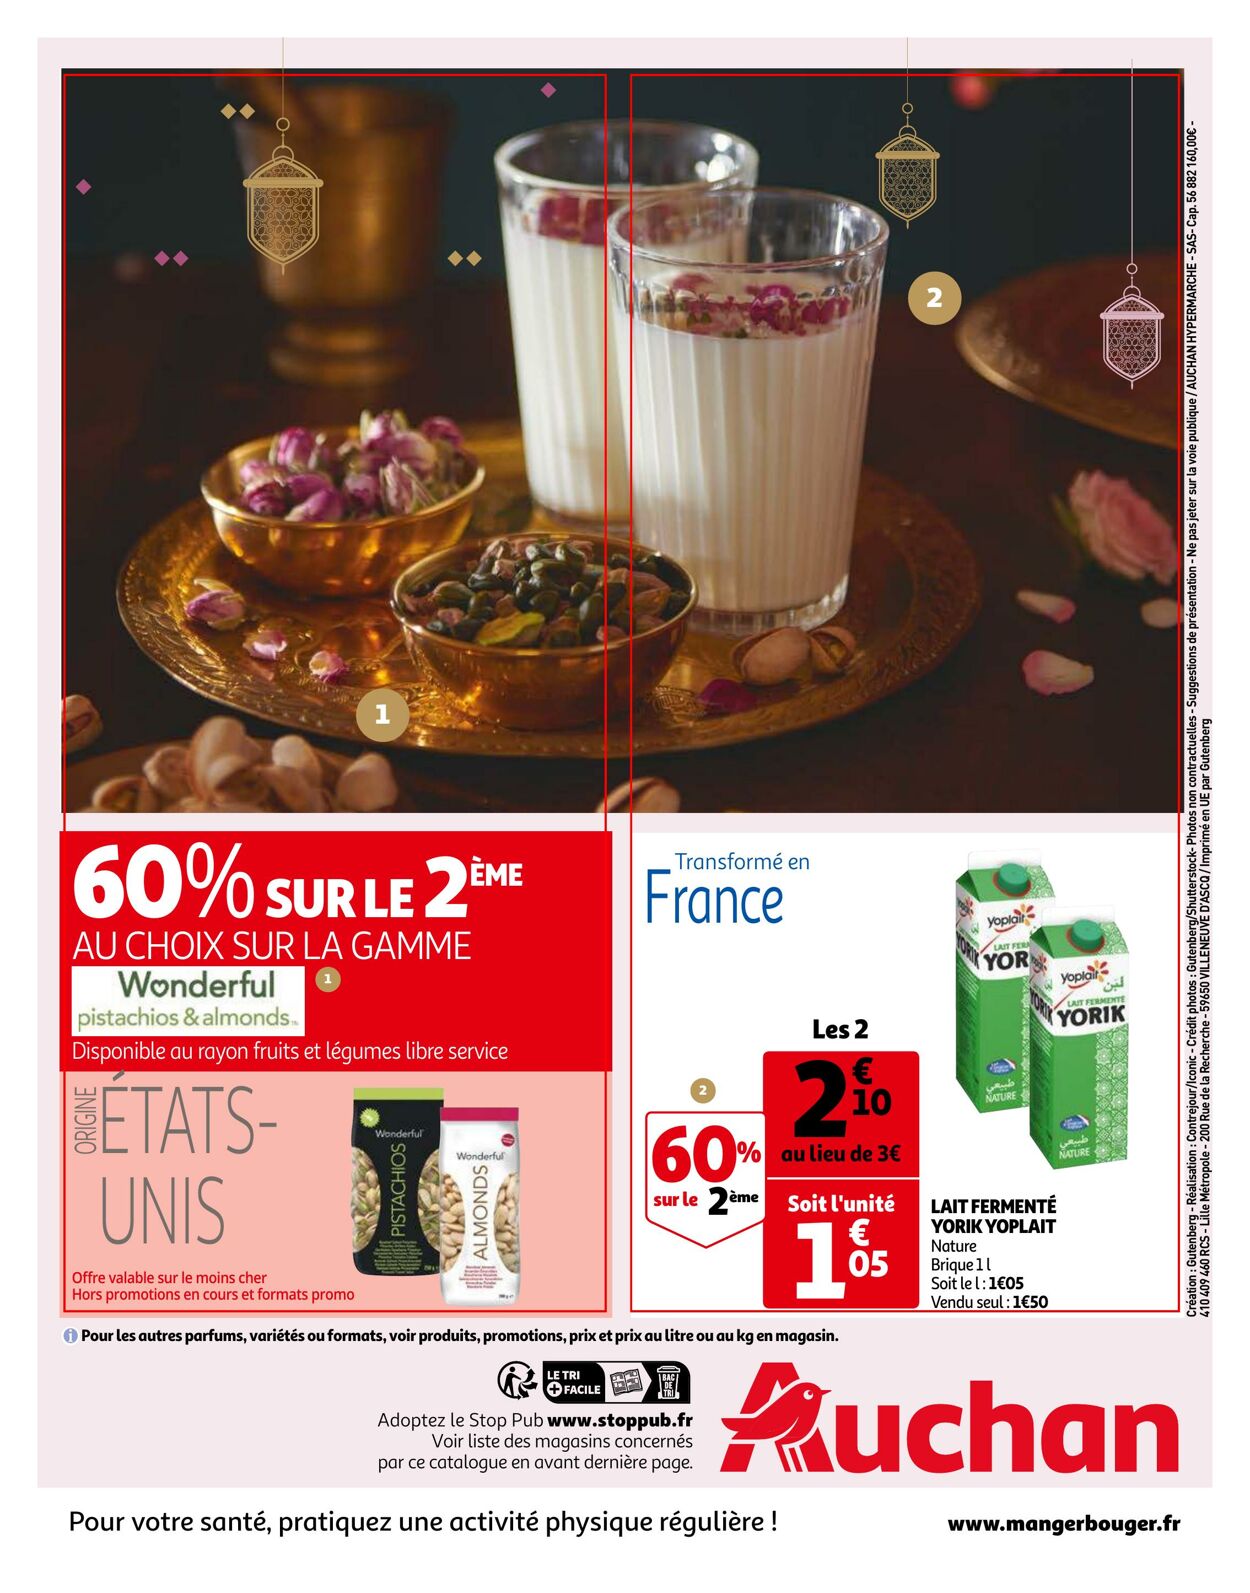 Catalogue Auchan 14.03.2023 - 03.04.2023